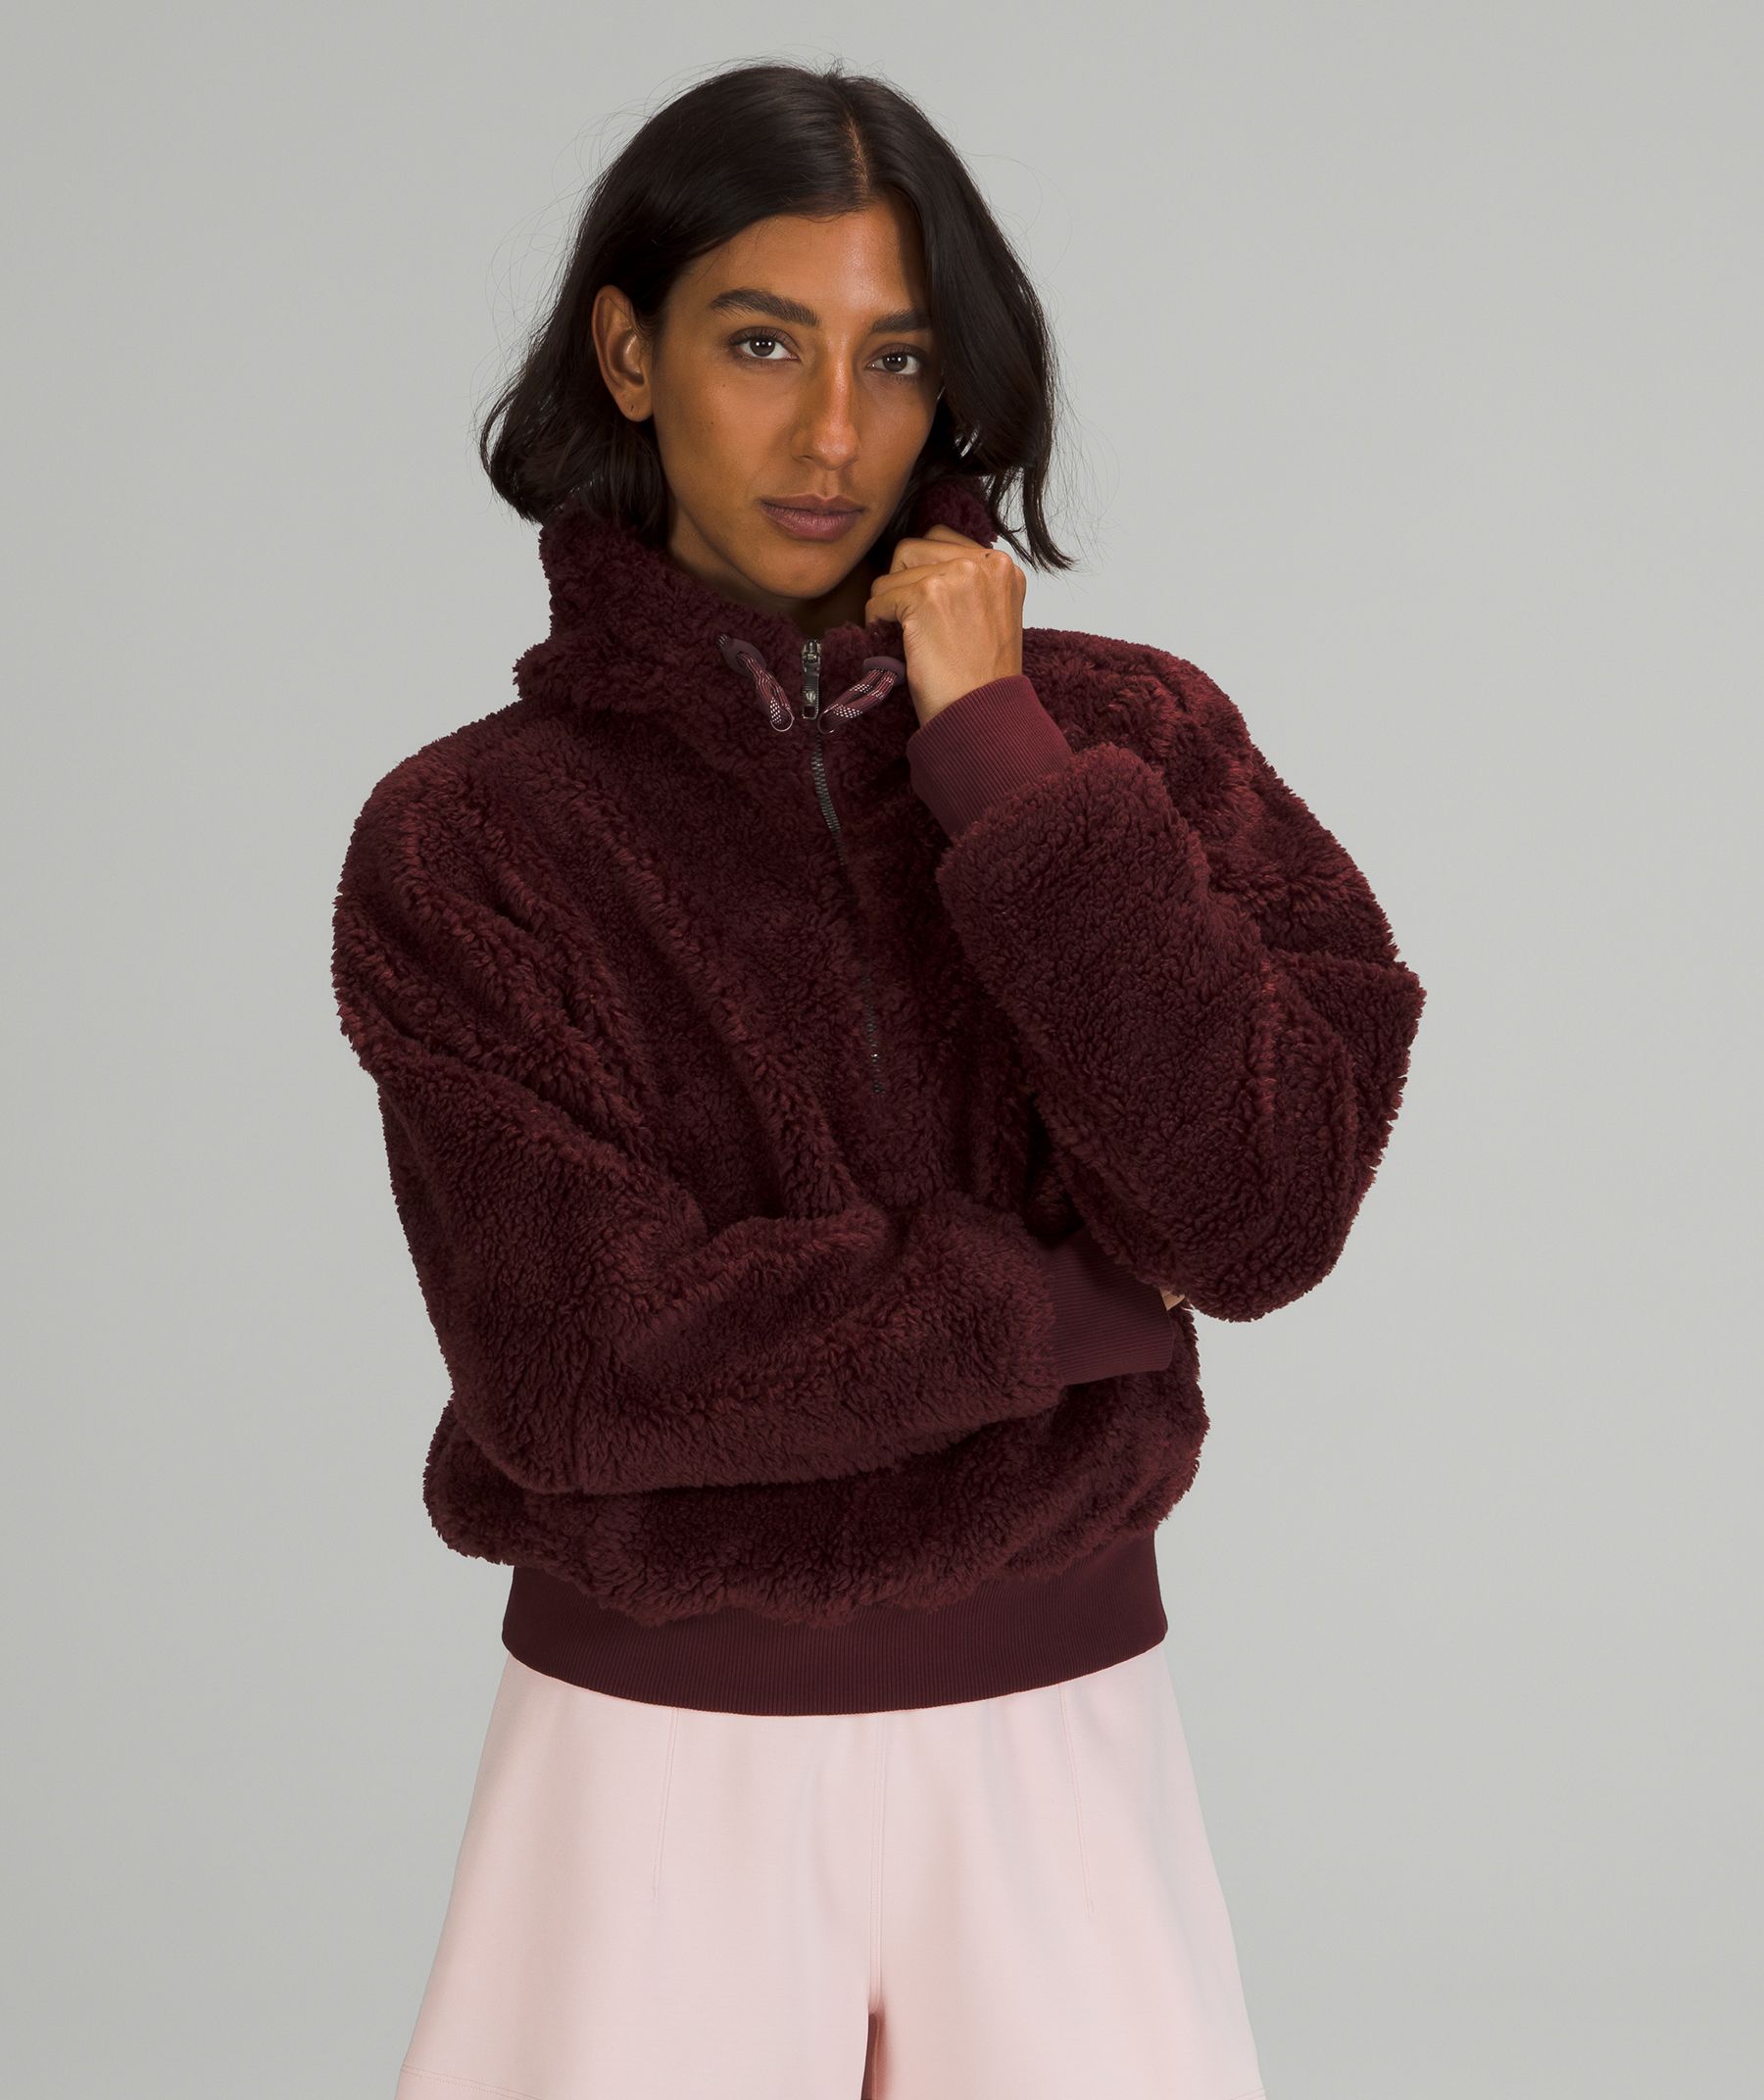 NWOT lululemon textured fleece half zipper hoodie size 12 white